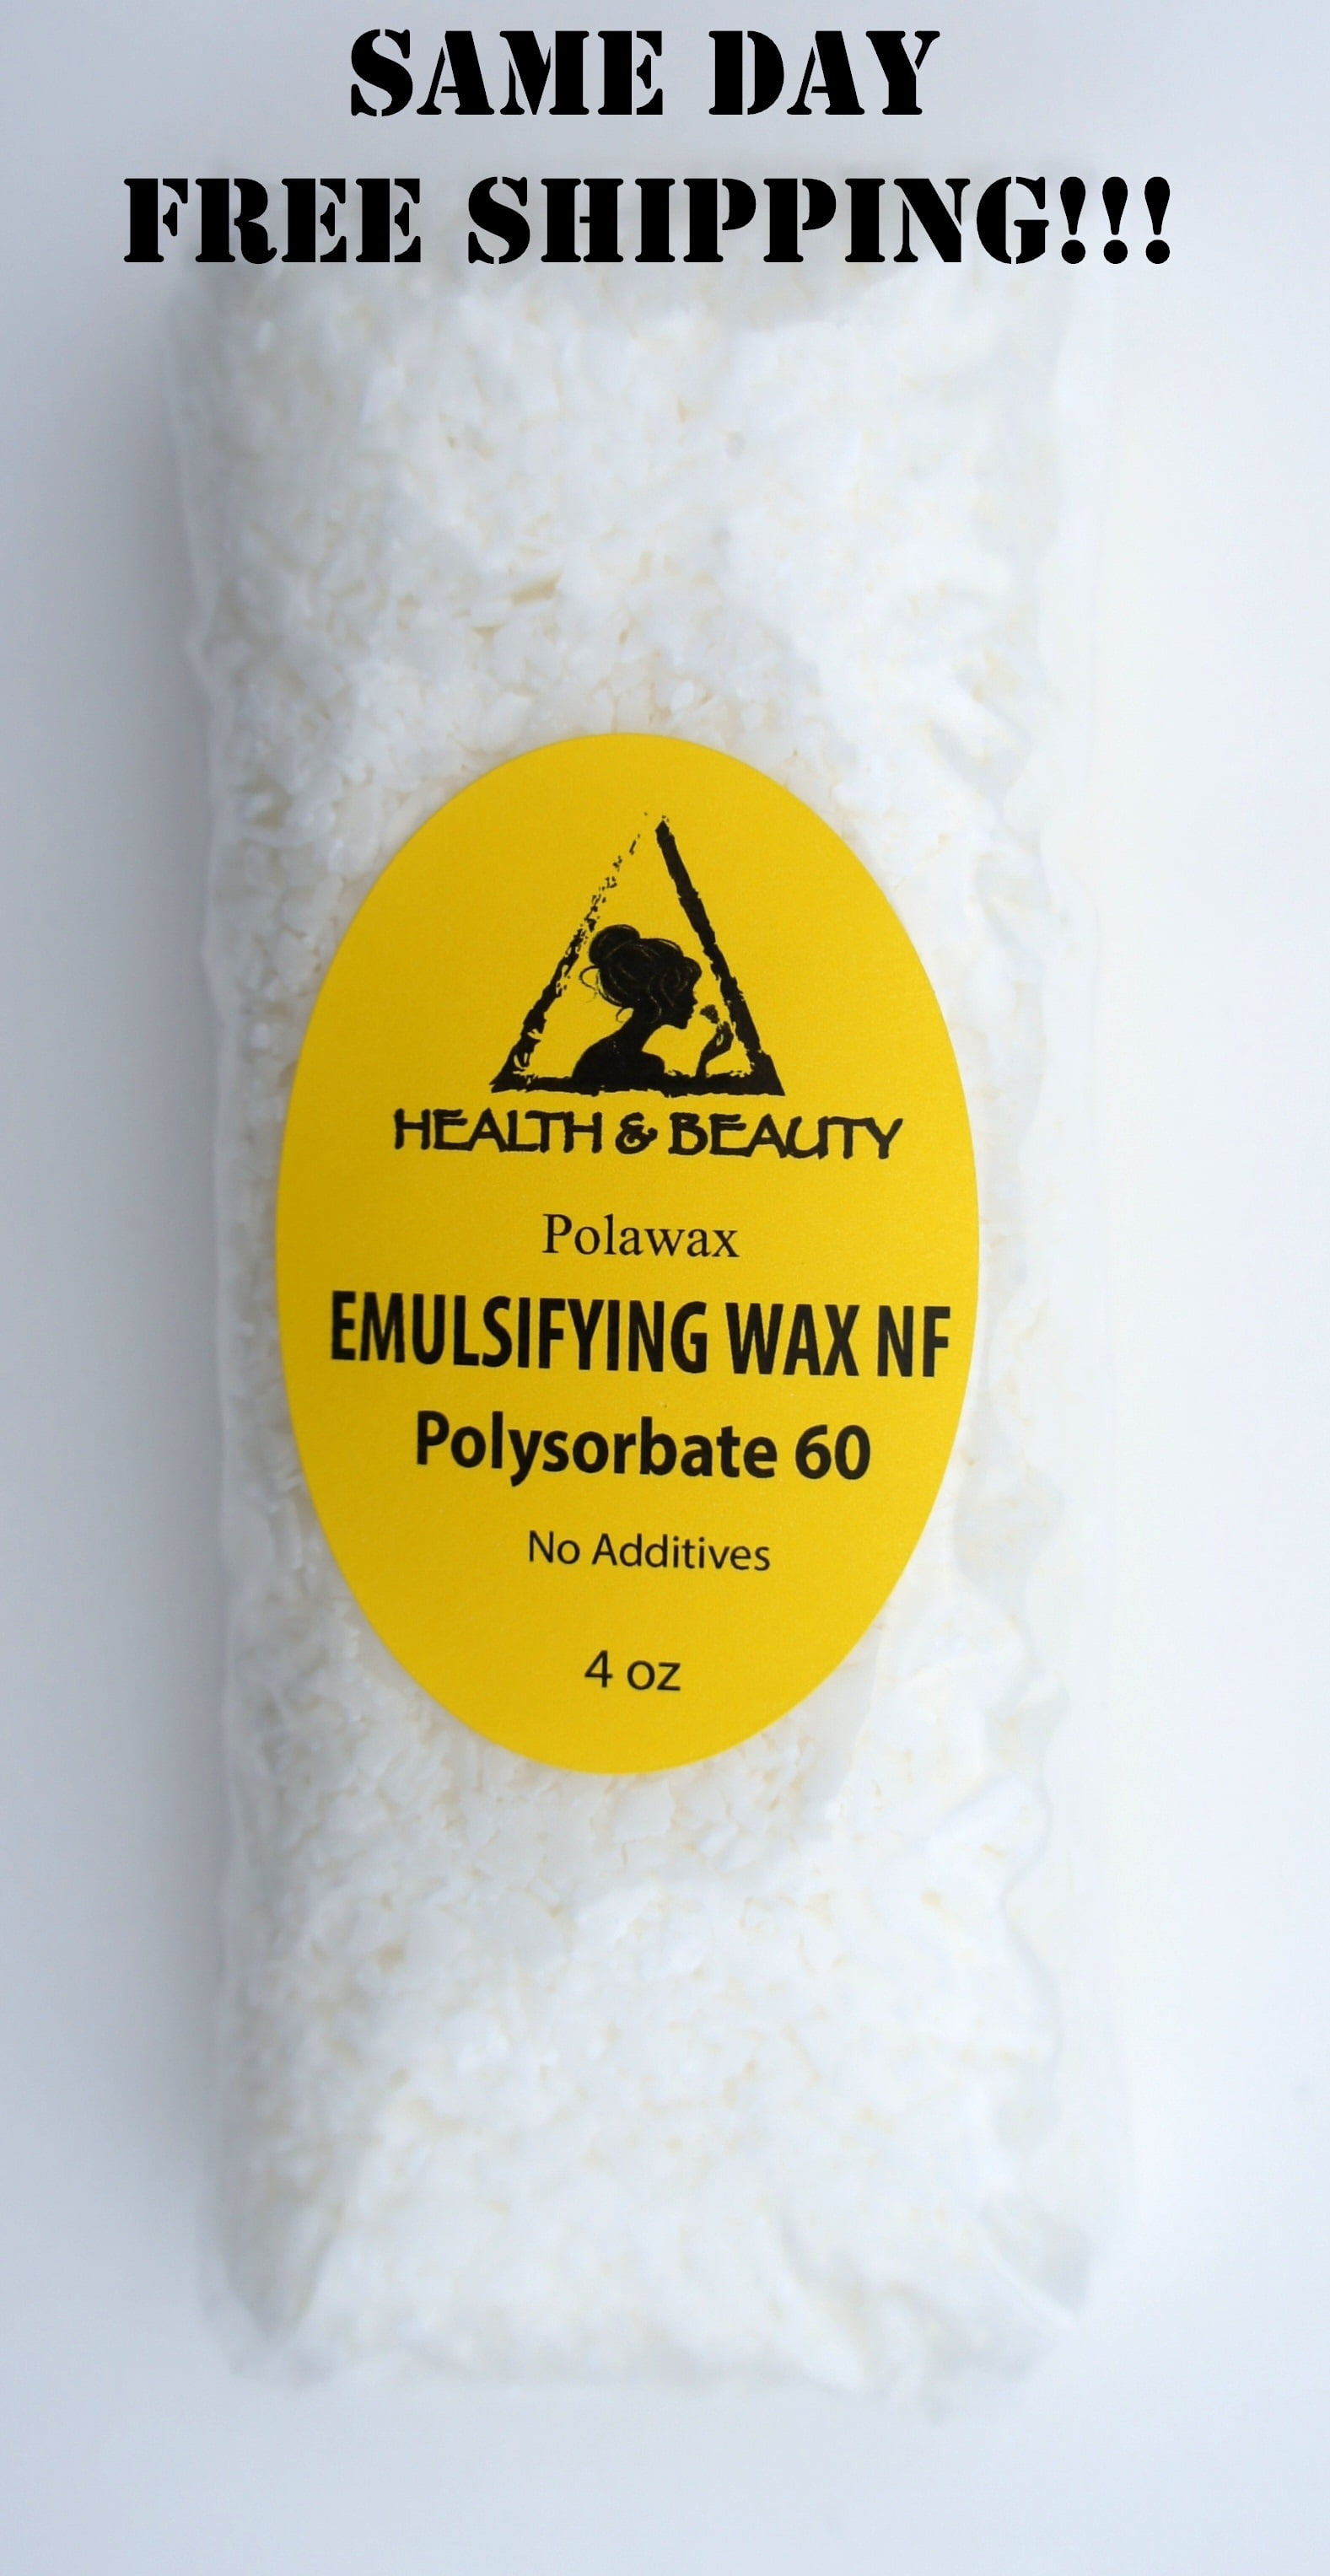 Emulsifying Wax NF, Non-GMO Premium Quality Polysorbate 60/ Polawax 8 oz.